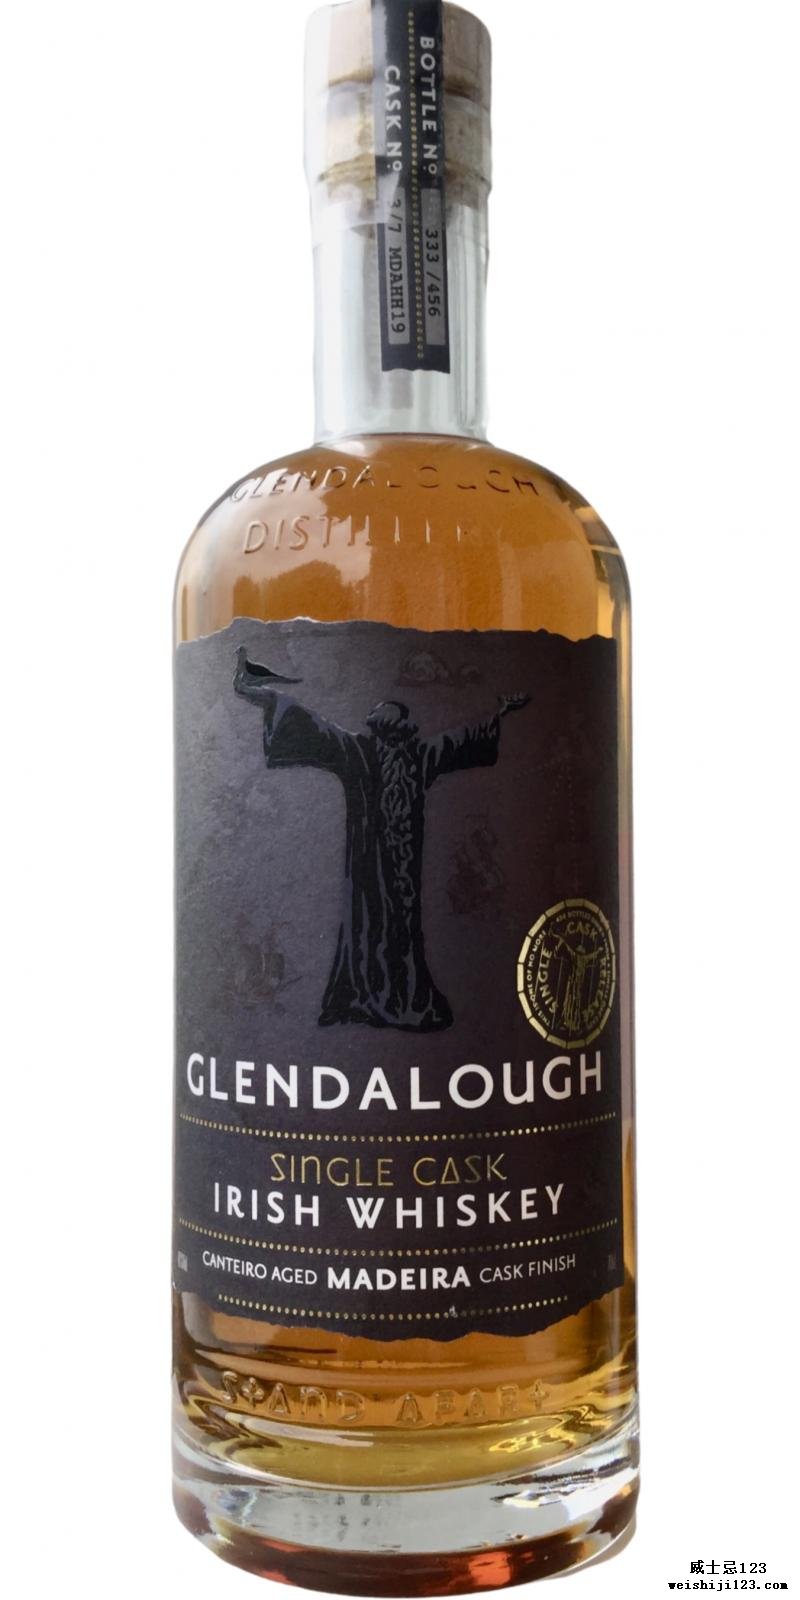 Glendalough Madeira Cask Finish